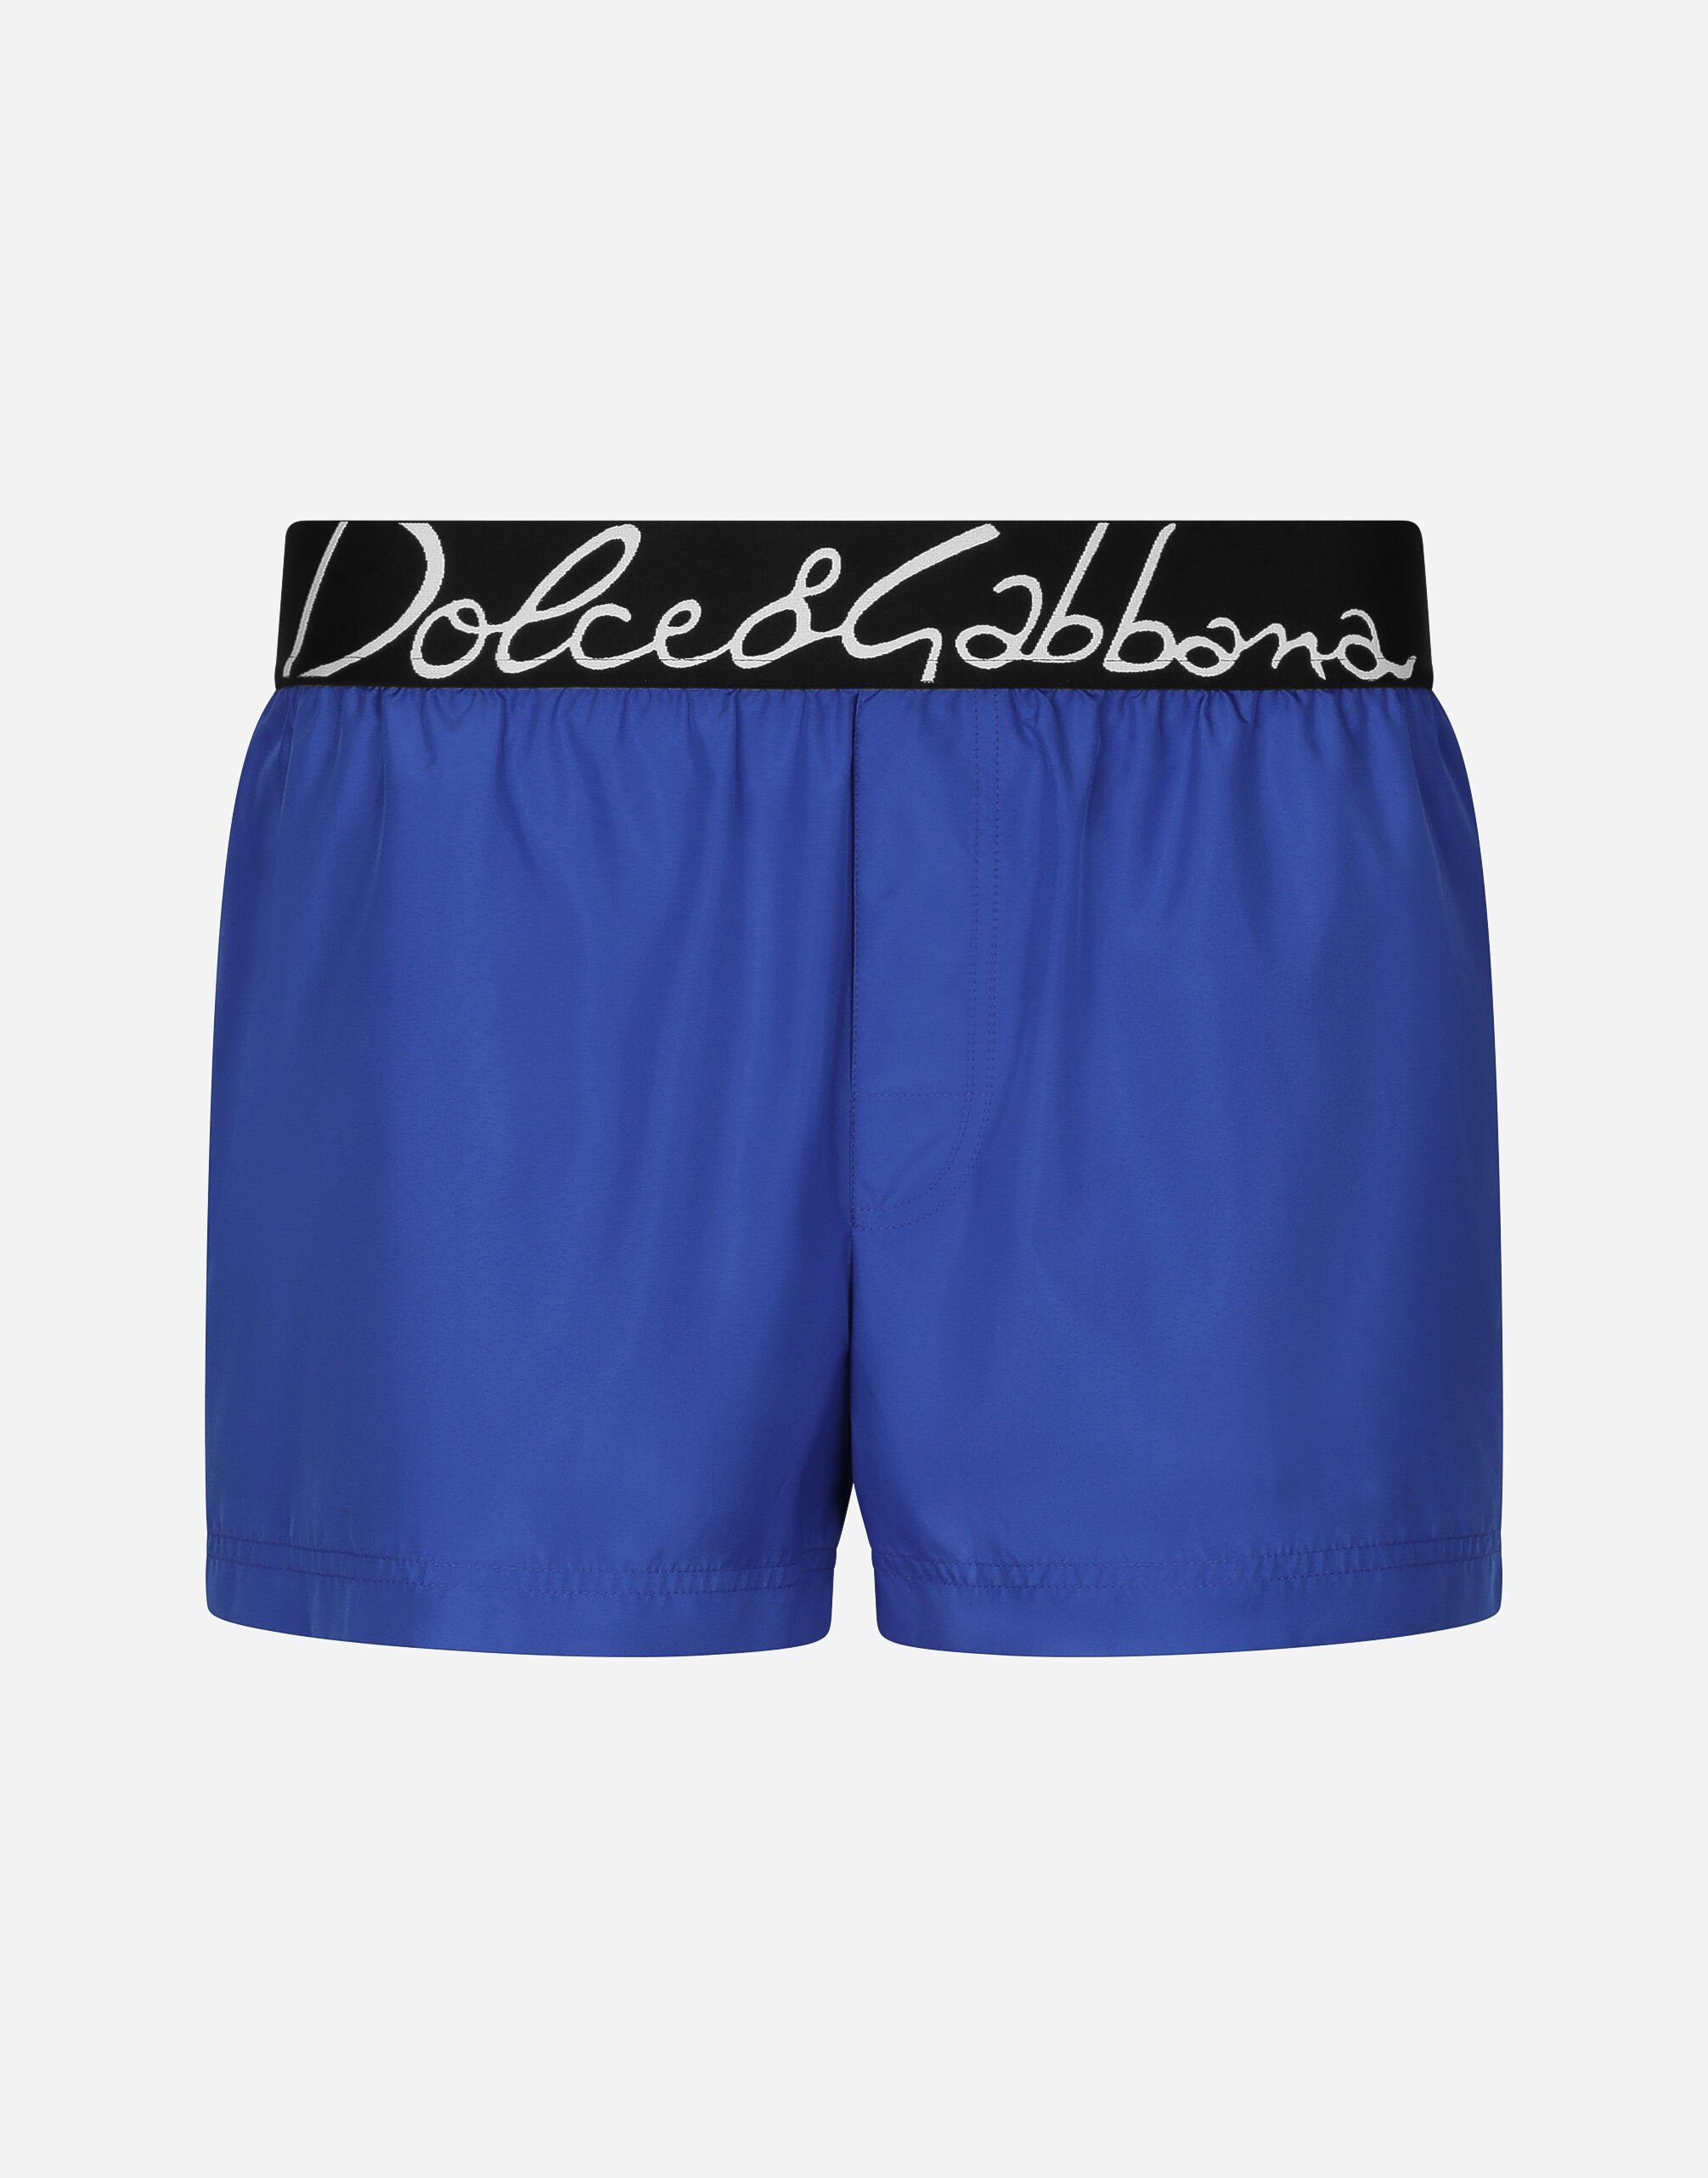 Dolce & Gabbana Short swim trunks with Dolce&Gabbana logo Print M4A13TISMHF